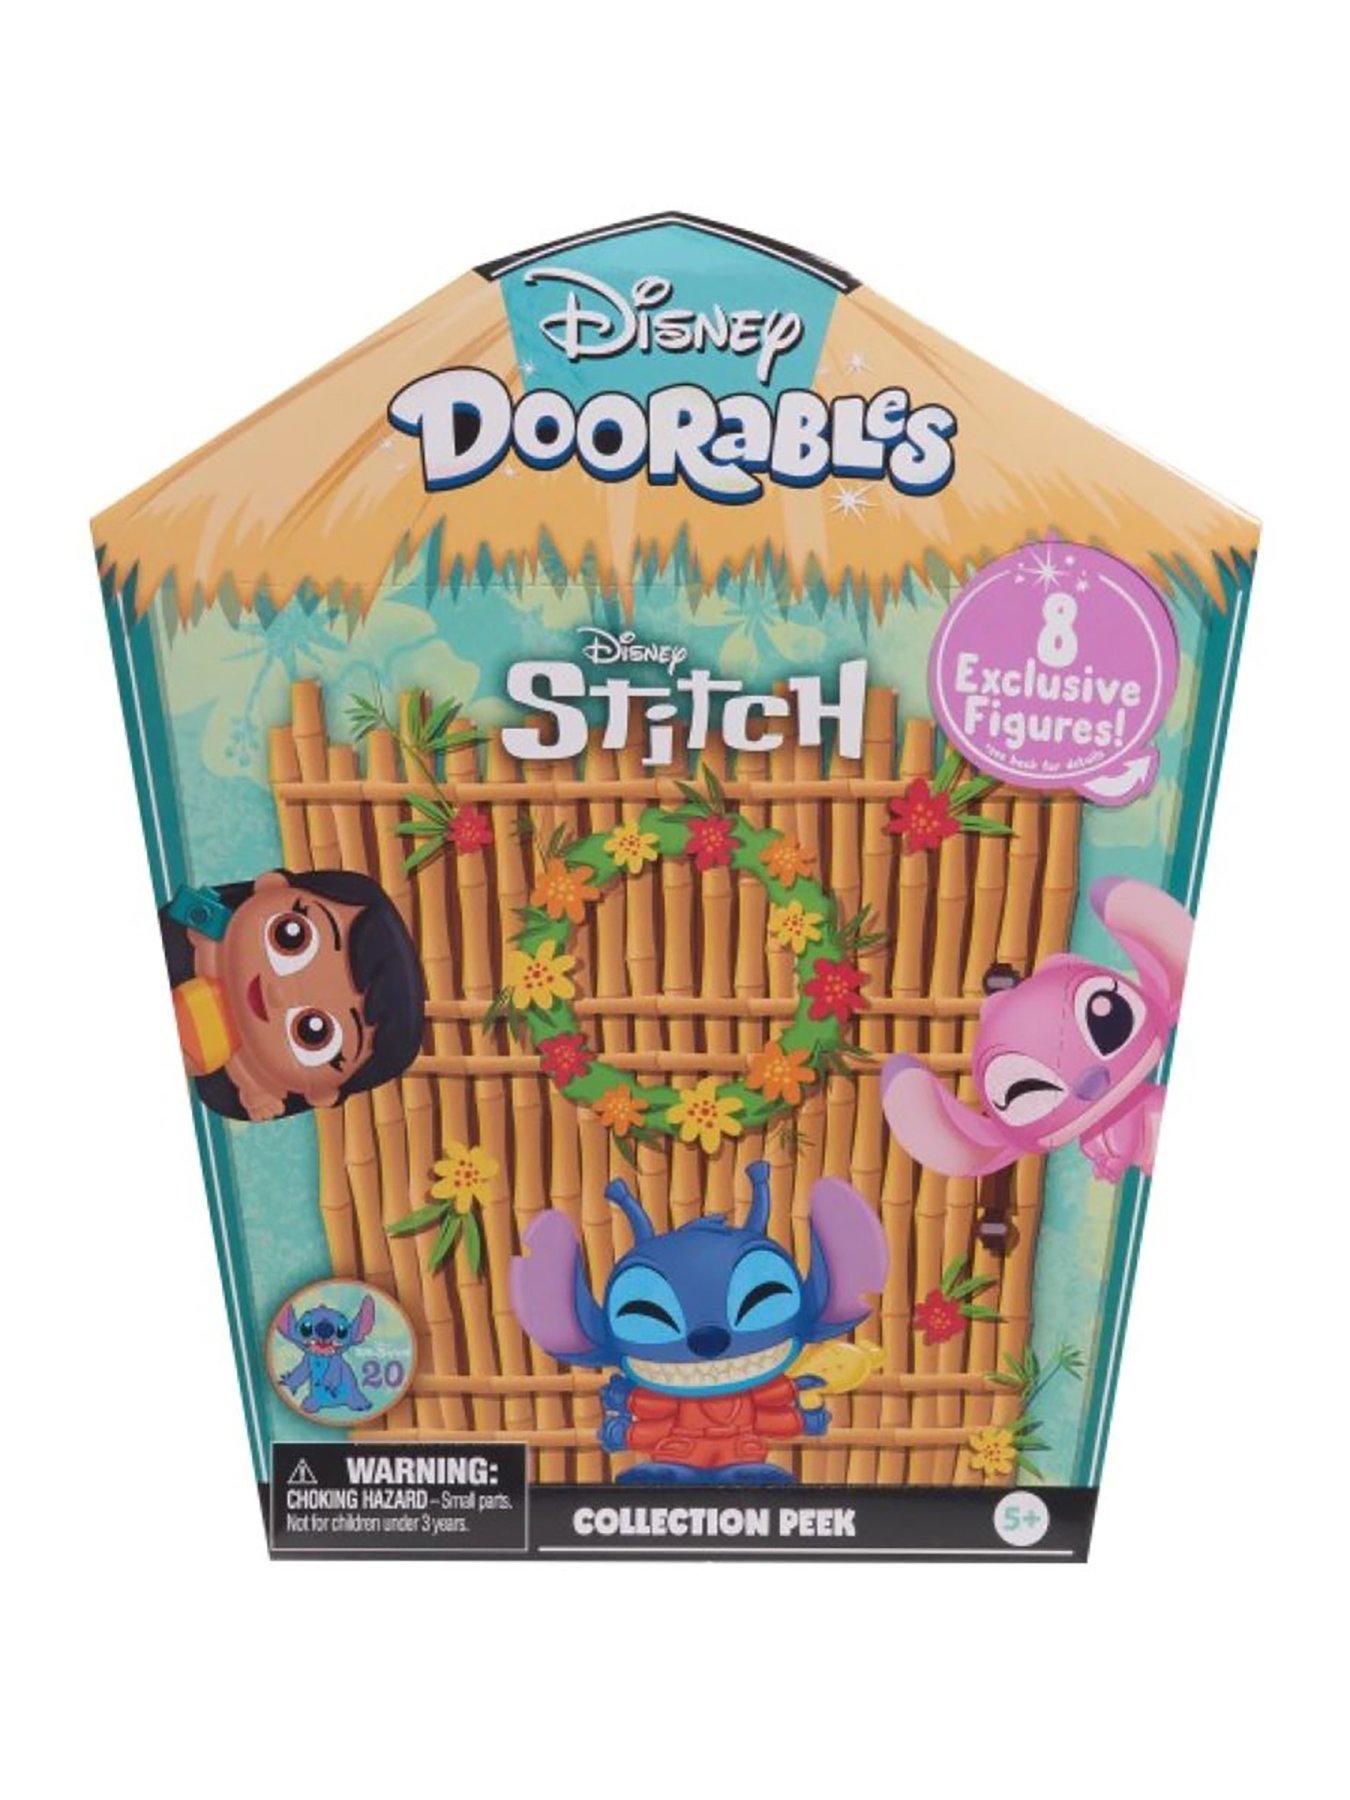 Disney Doorables Series 4 Blind Bag FULL CASE from Dollar Tree